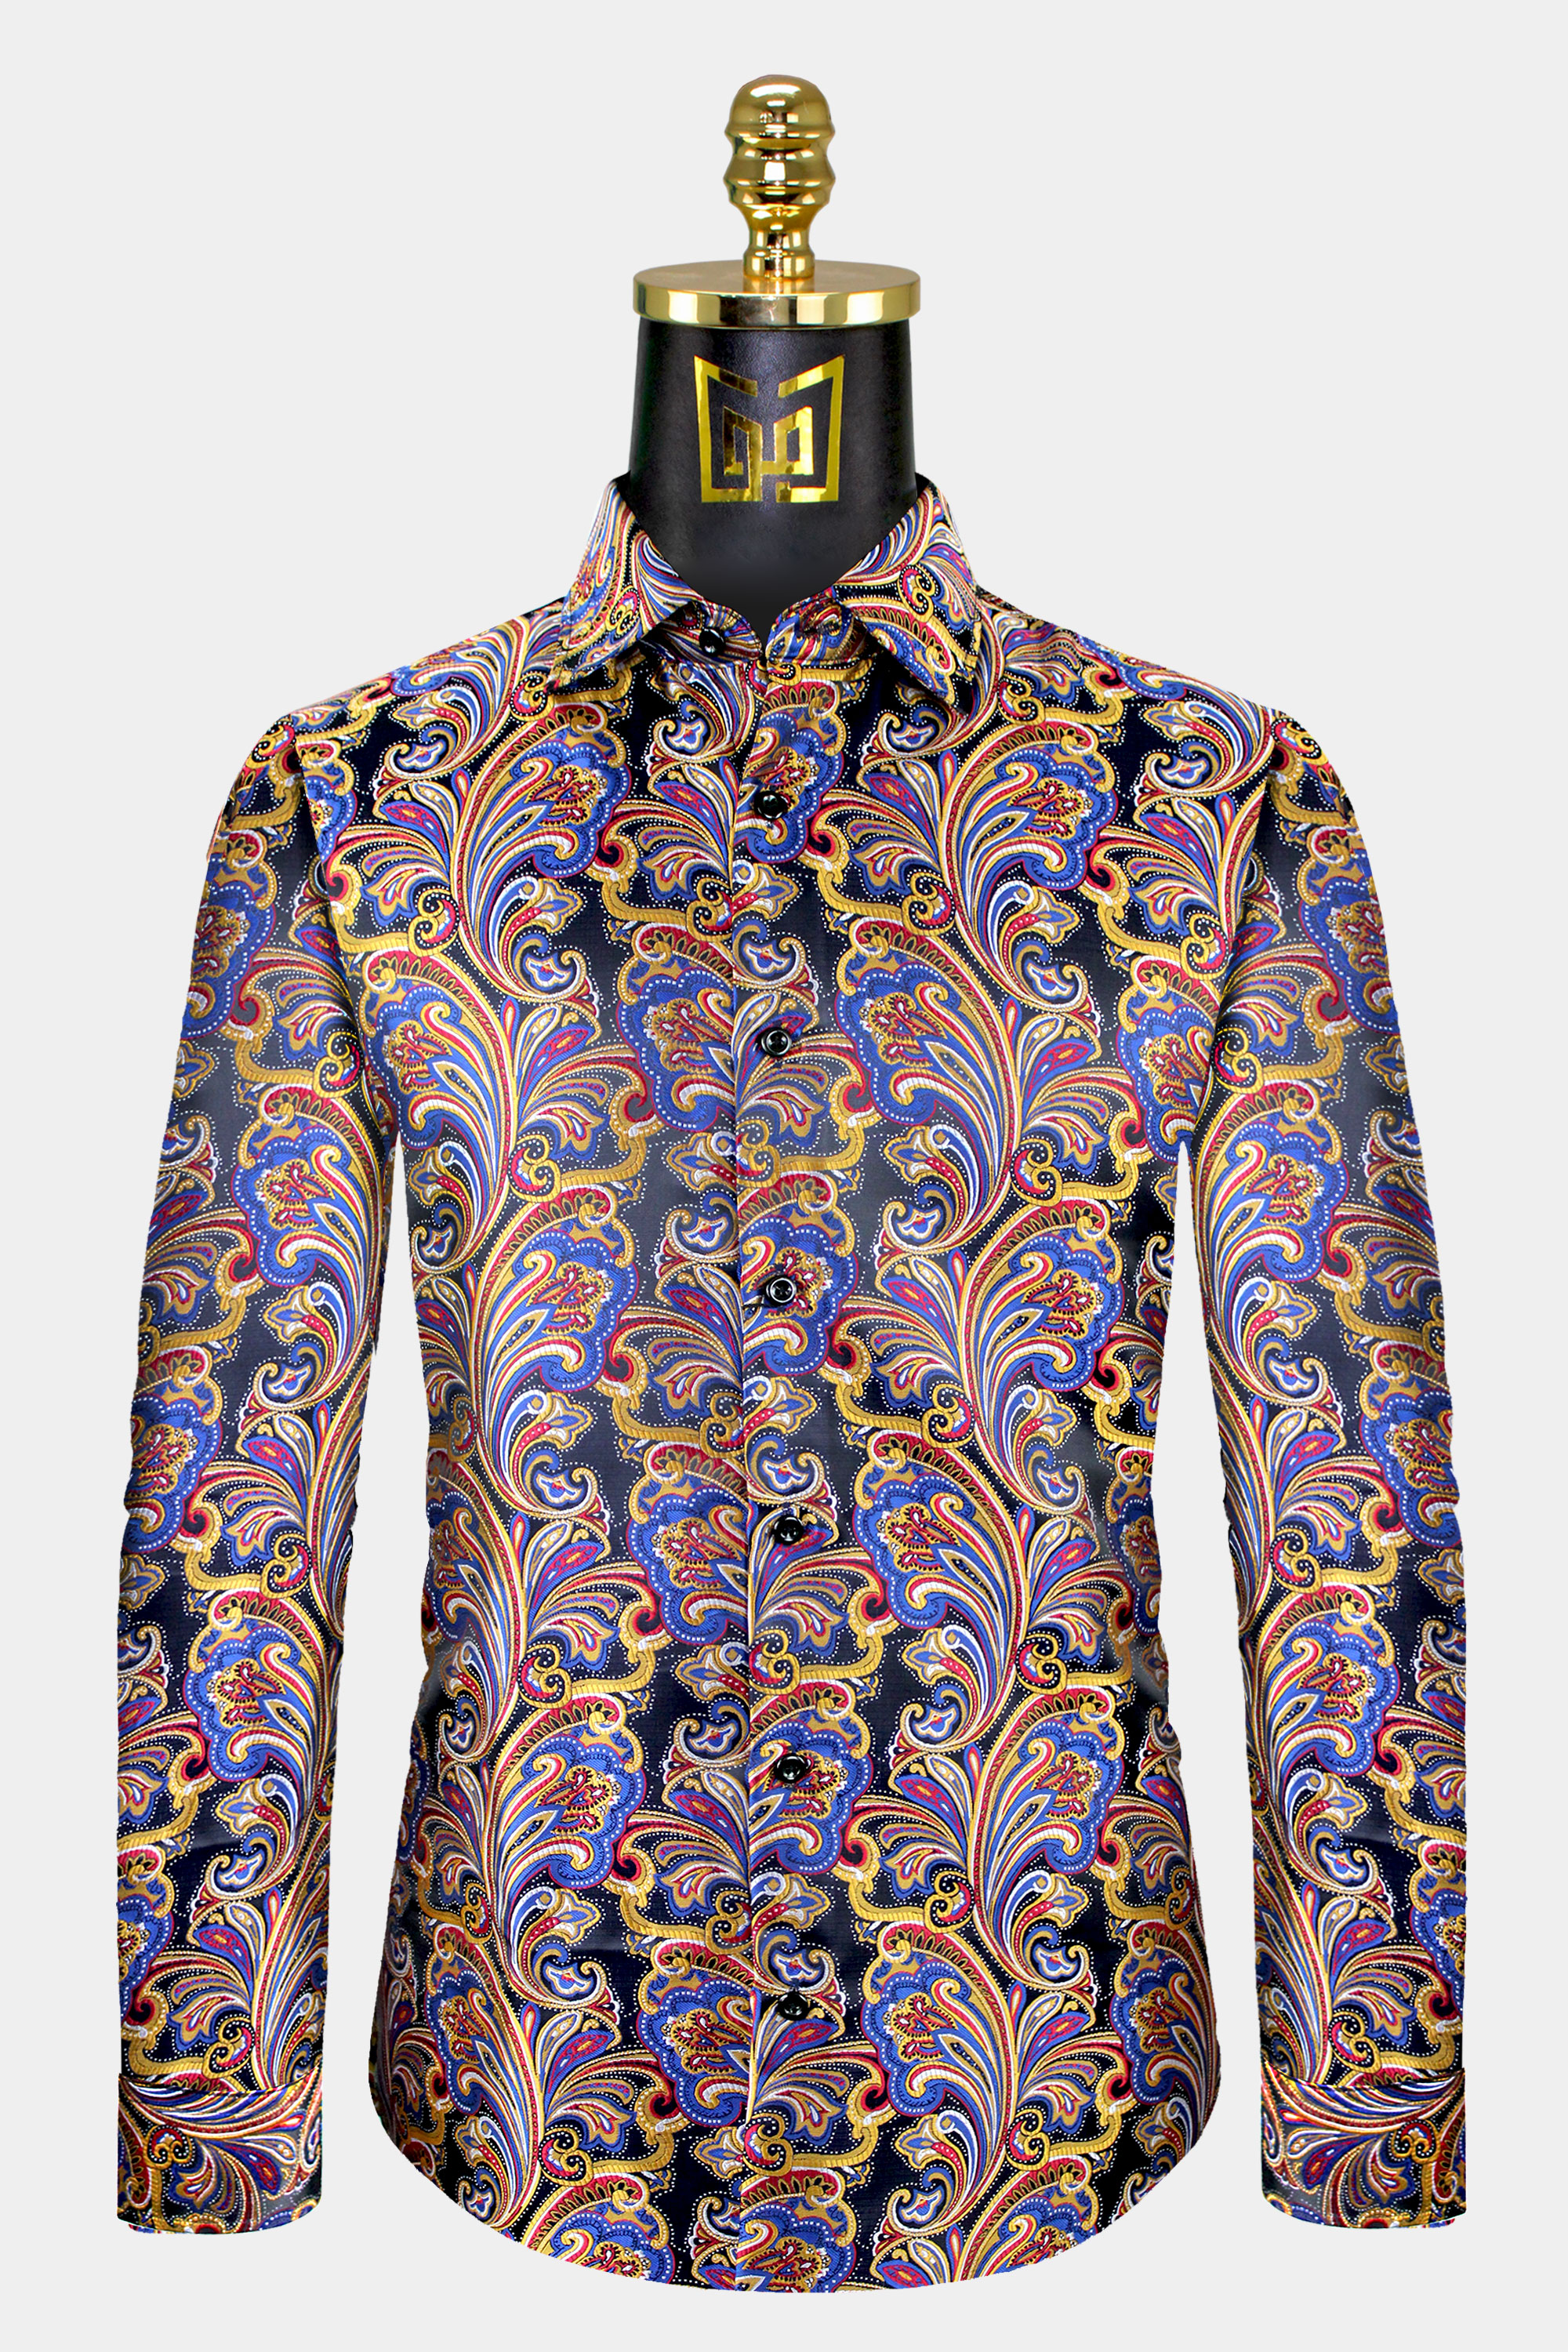 Mens-Colorful-Shirt-Multi-Color-Paisley-Dress-Shirt-from-Gentlemansguru.com